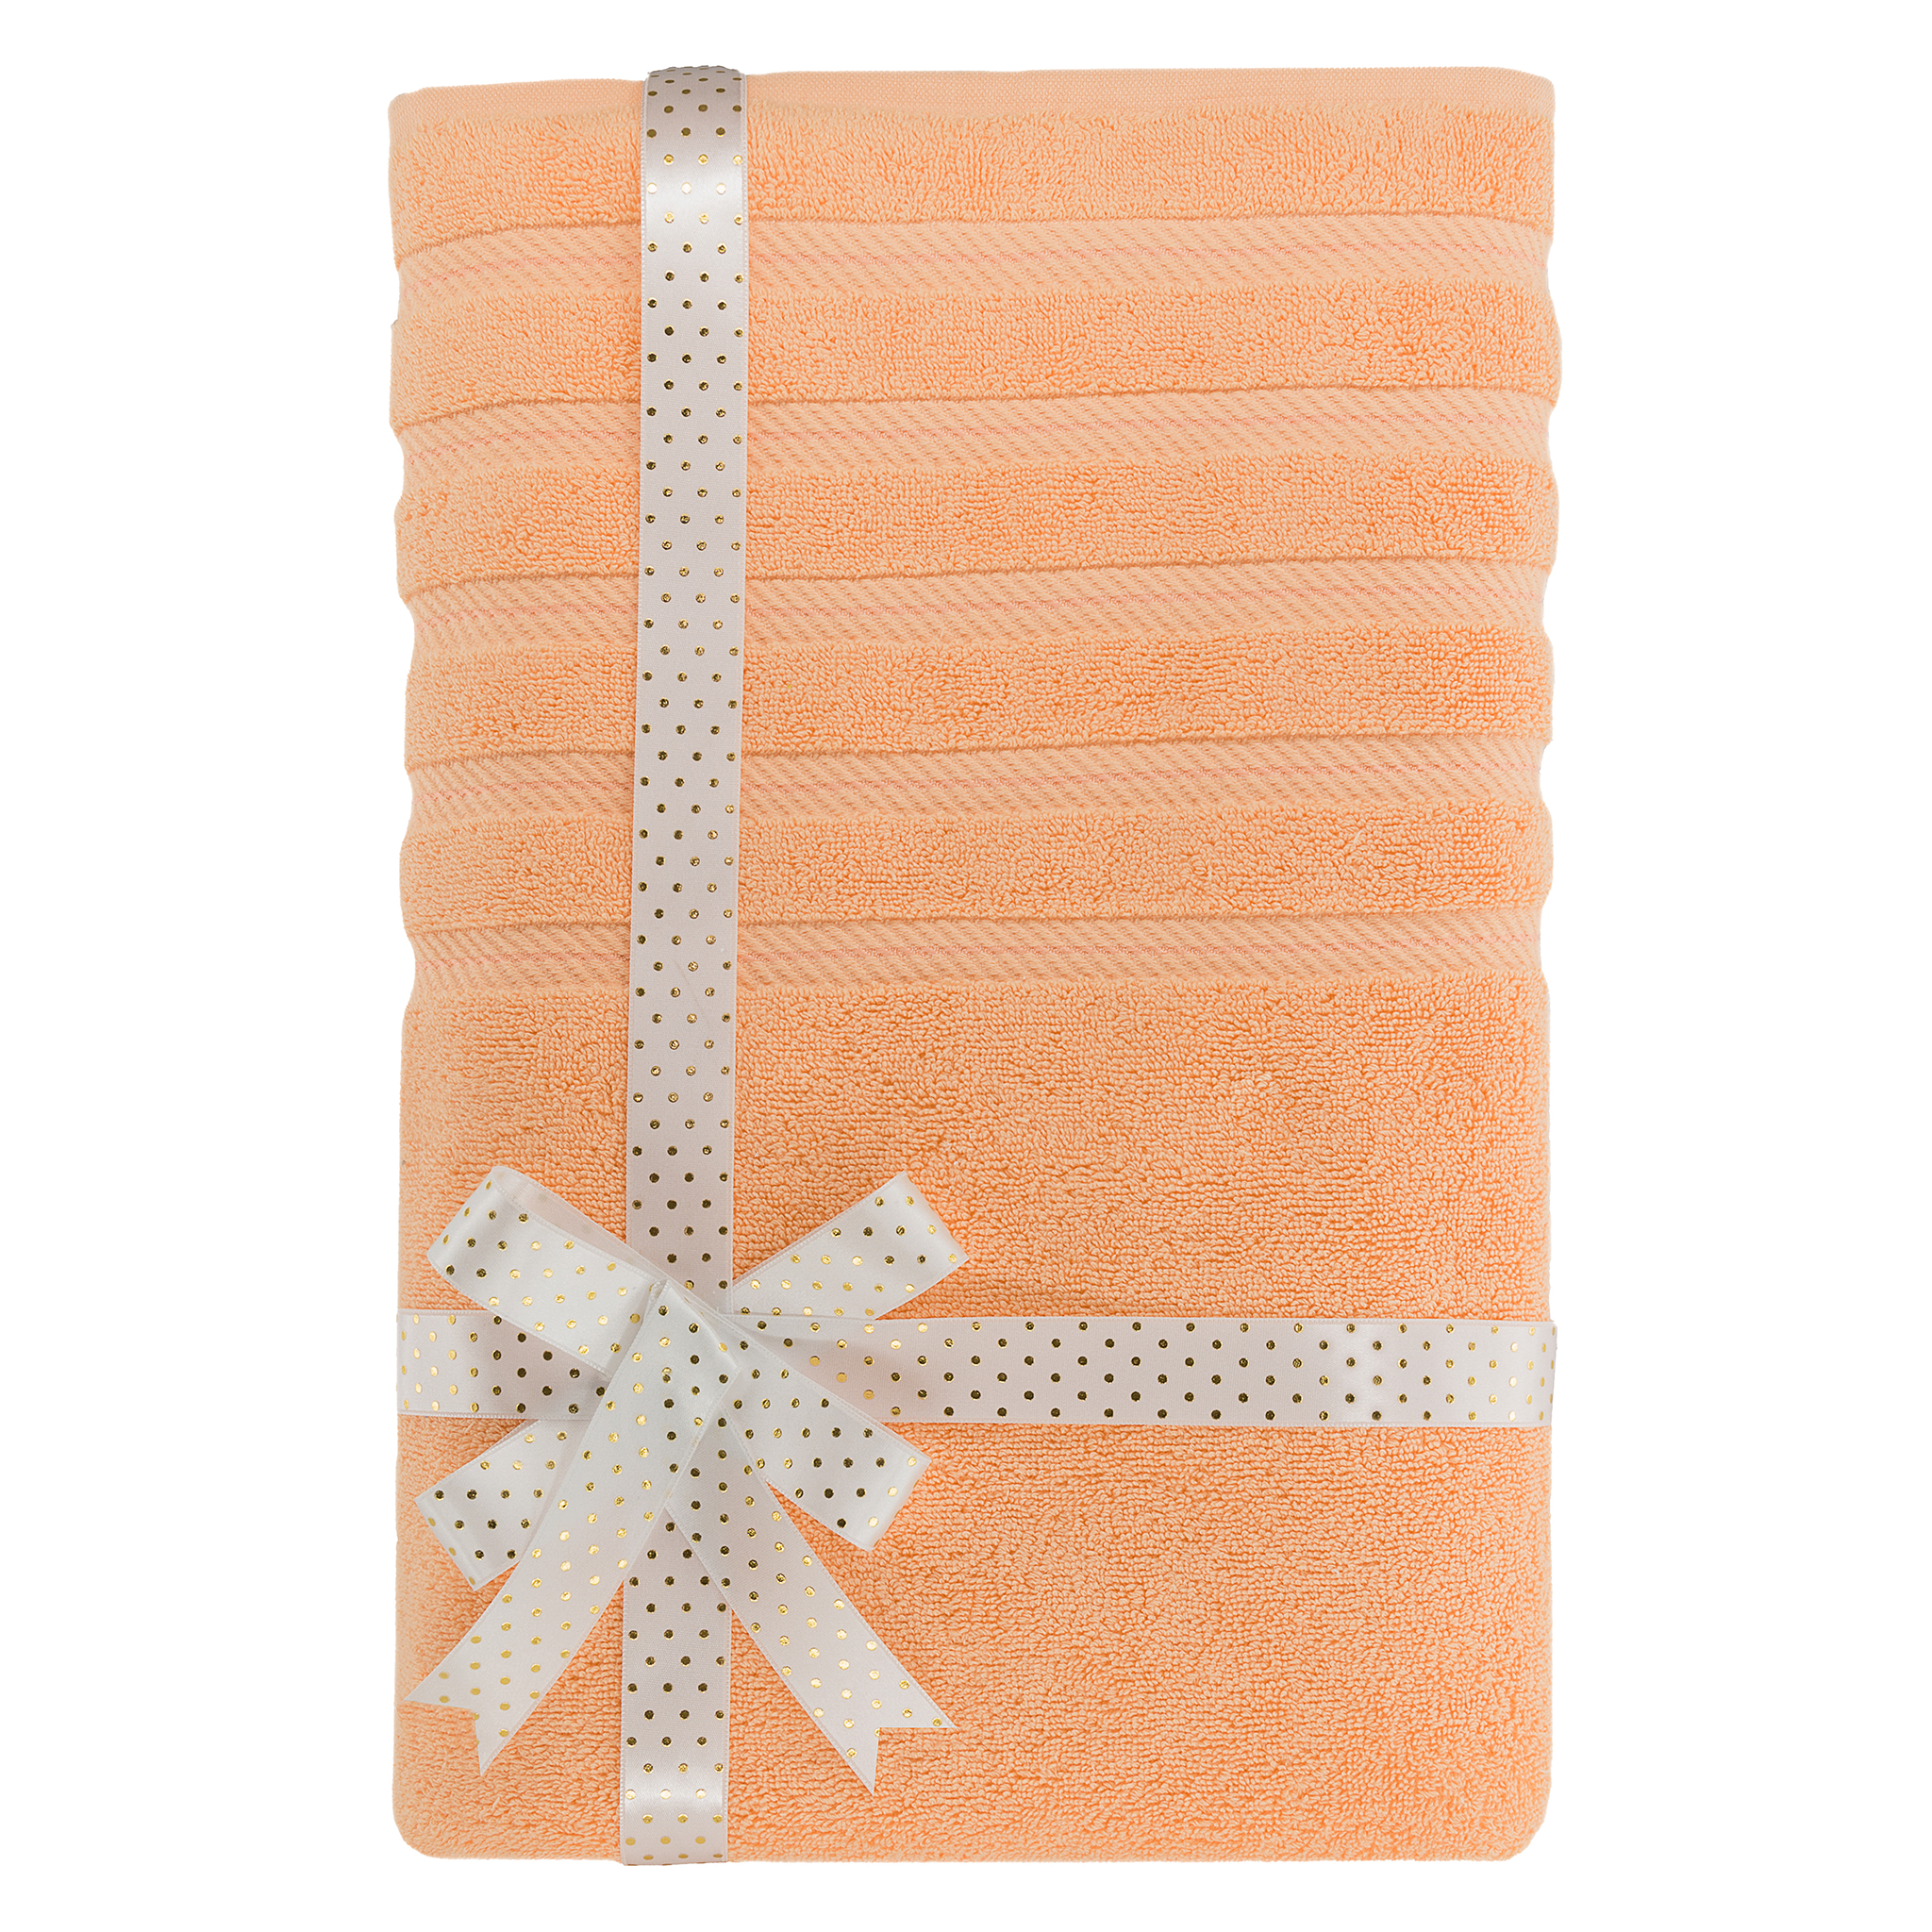 American Soft Linen - 35x70 Jumbo Bath Sheet Turkish Bath Towel - 16 Piece Case Pack - Malibu-Peach - 3